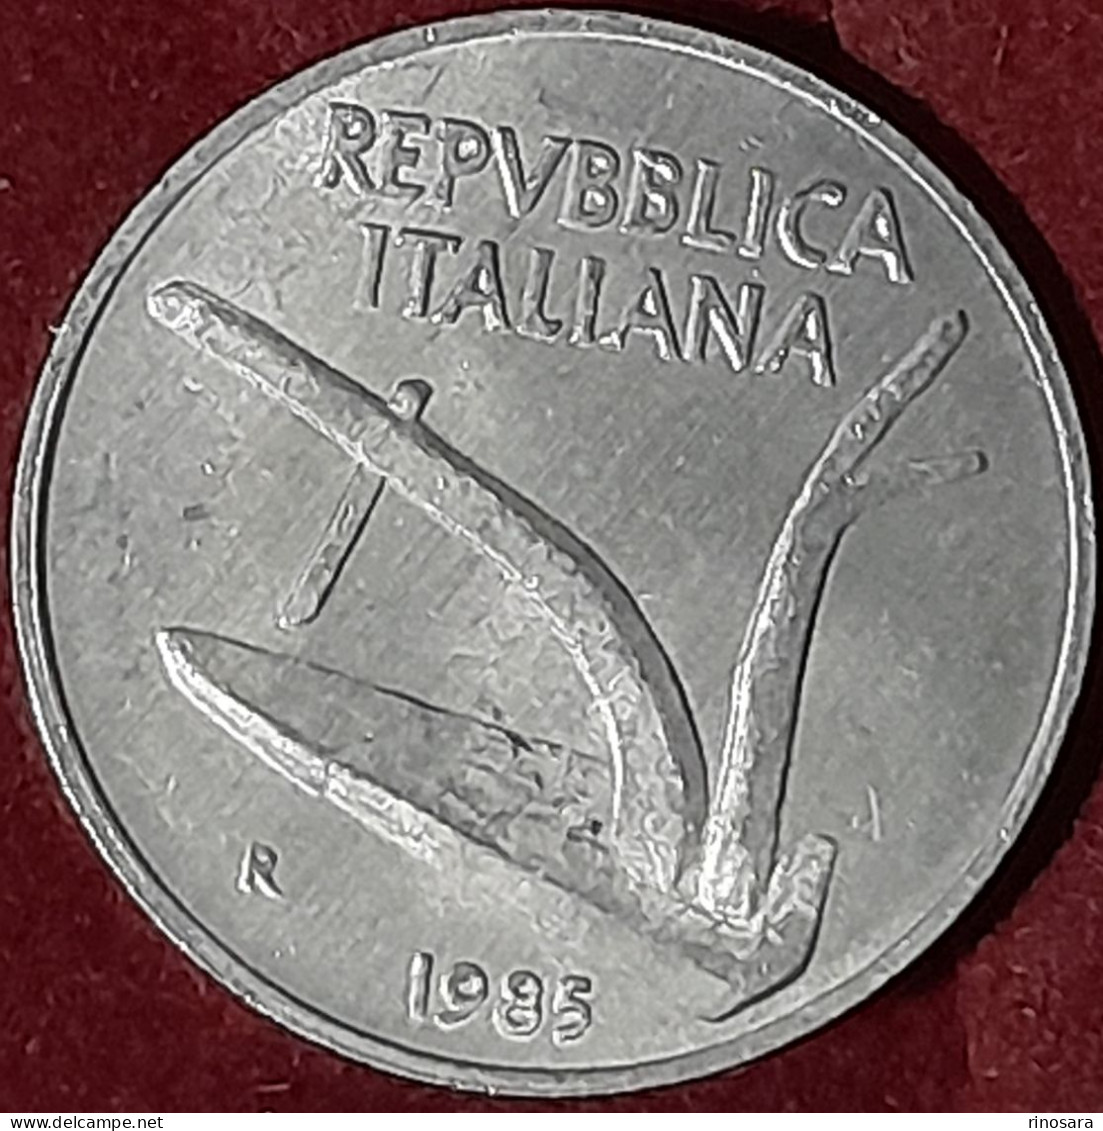 Errore Di Conio 10 Lire 1985 Repubblica Italiana - Variëteiten En Curiosa